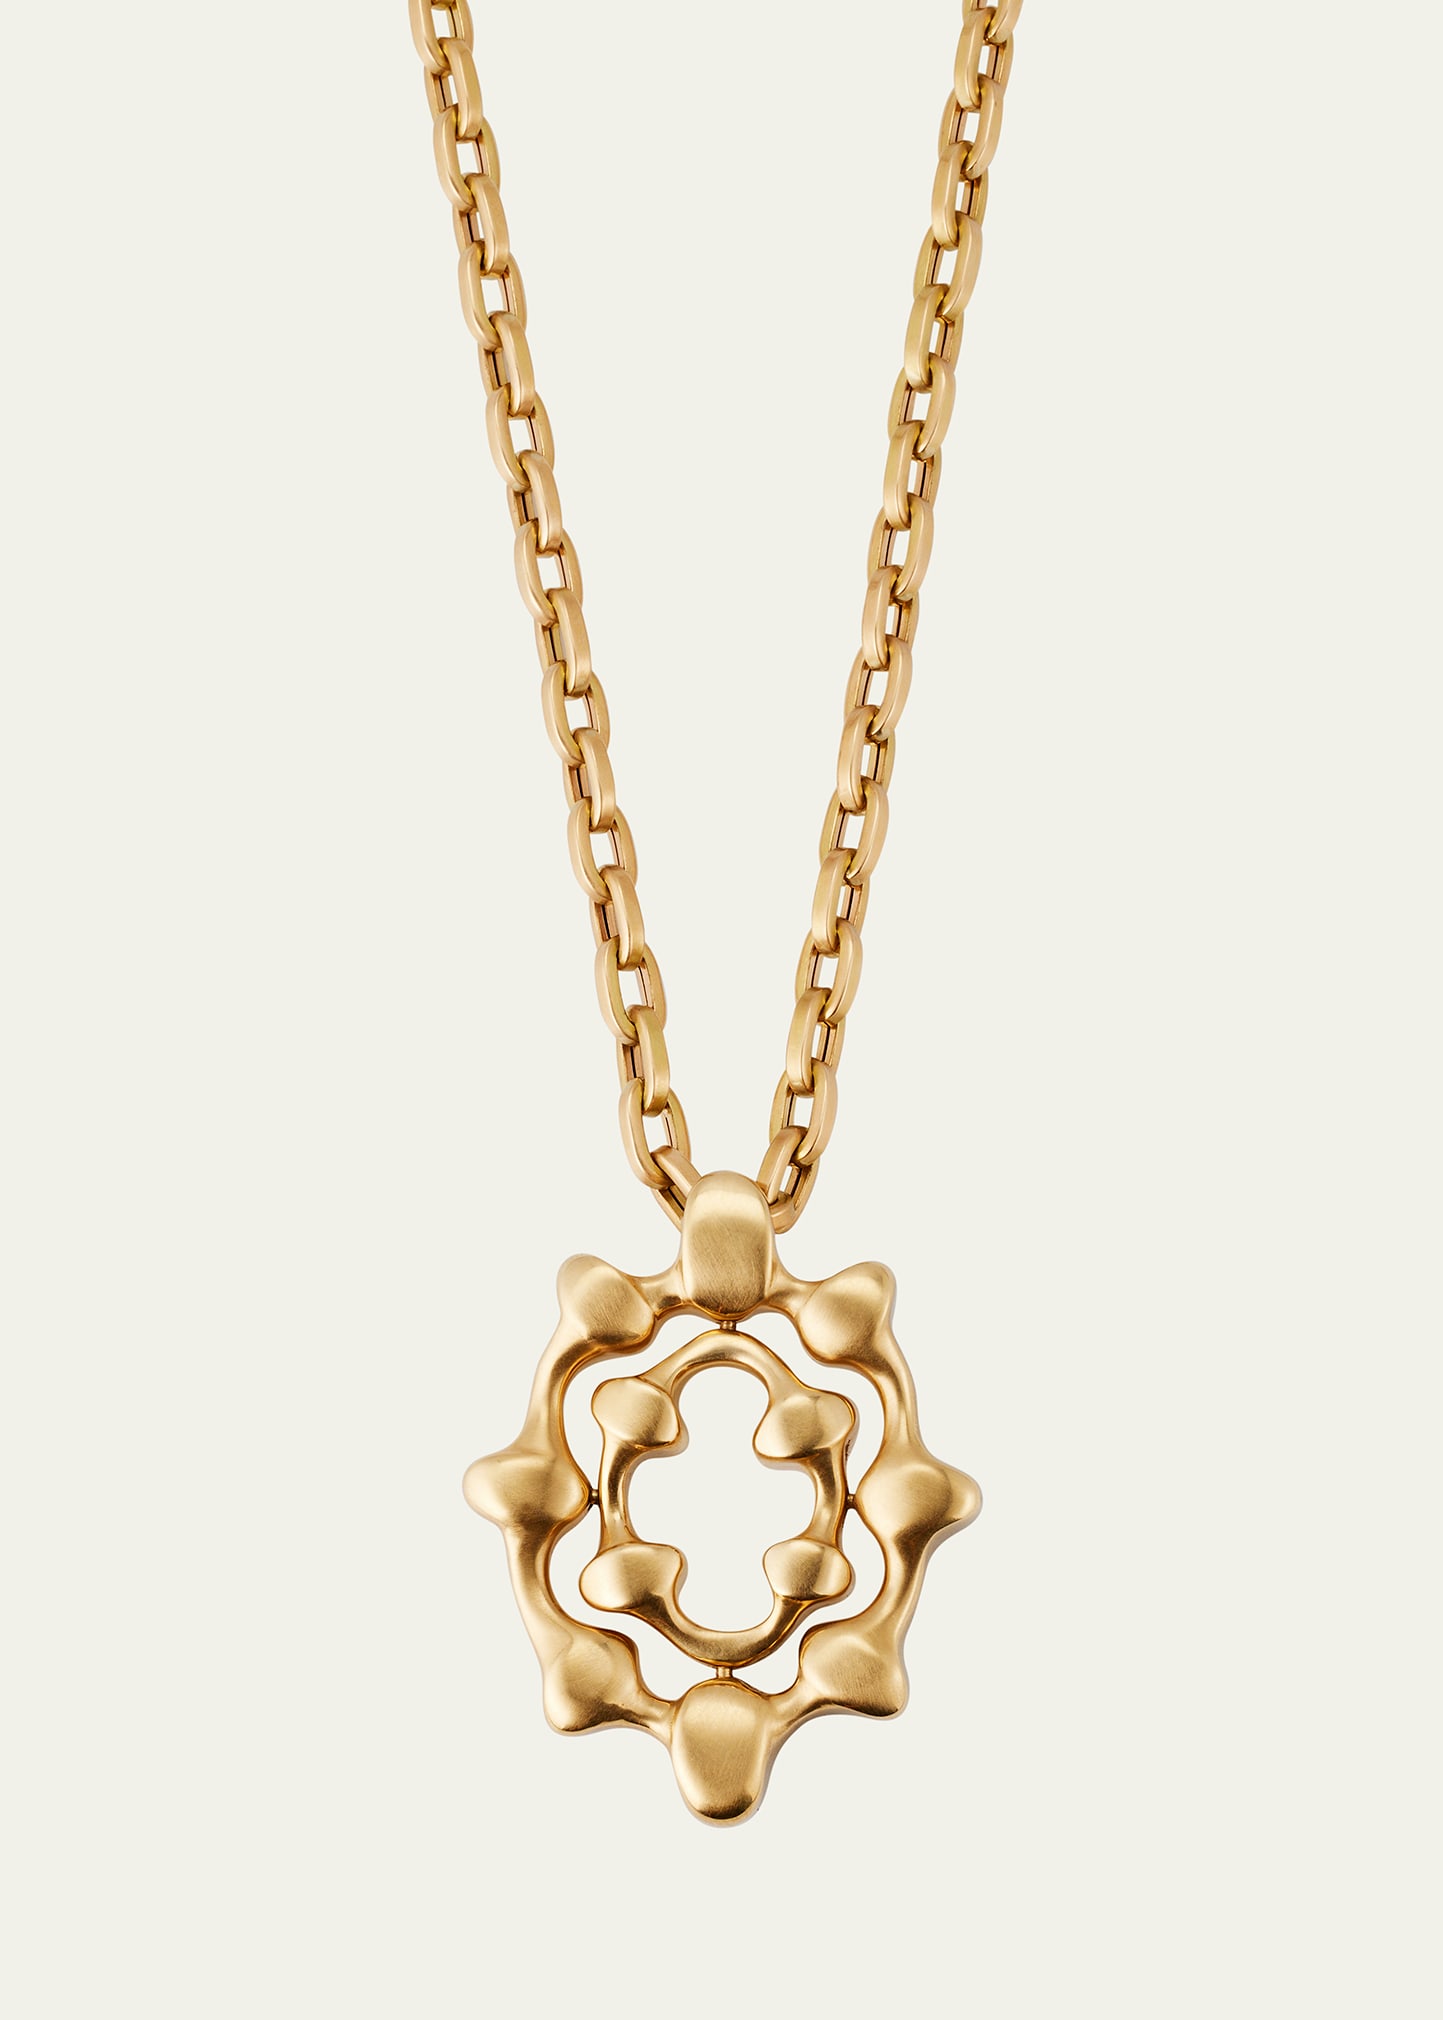 Vram Yellow Gold Chrona Pendant On Chain Necklace, 35"l